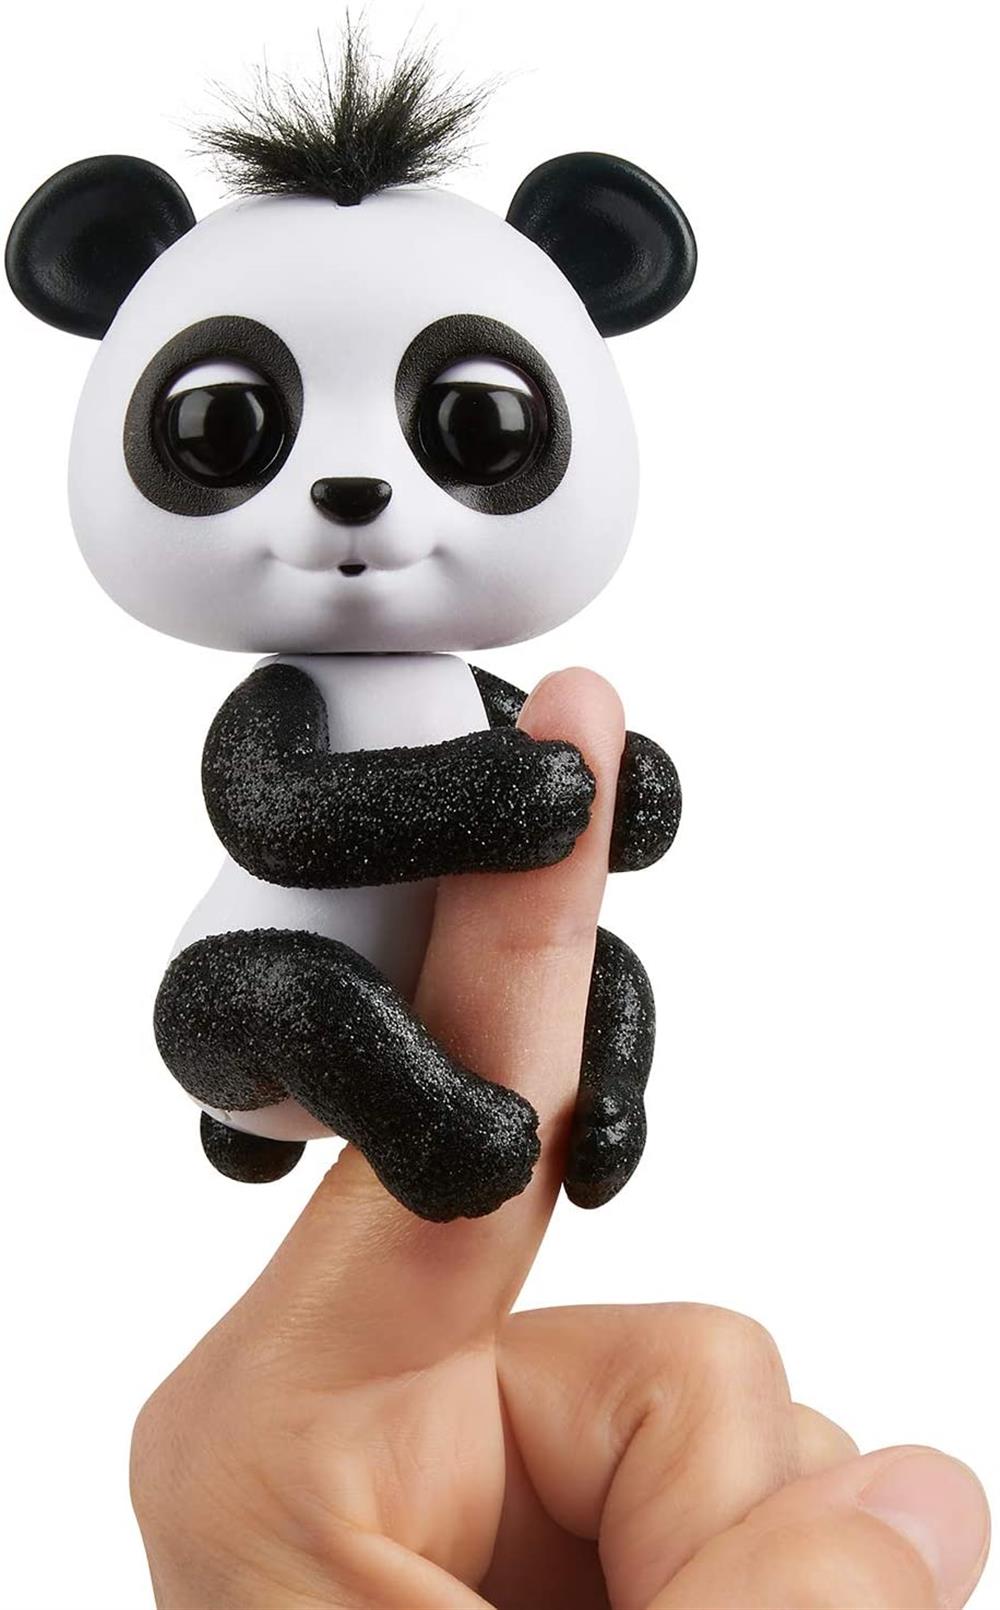 Fingerlings Drew Baby Panda